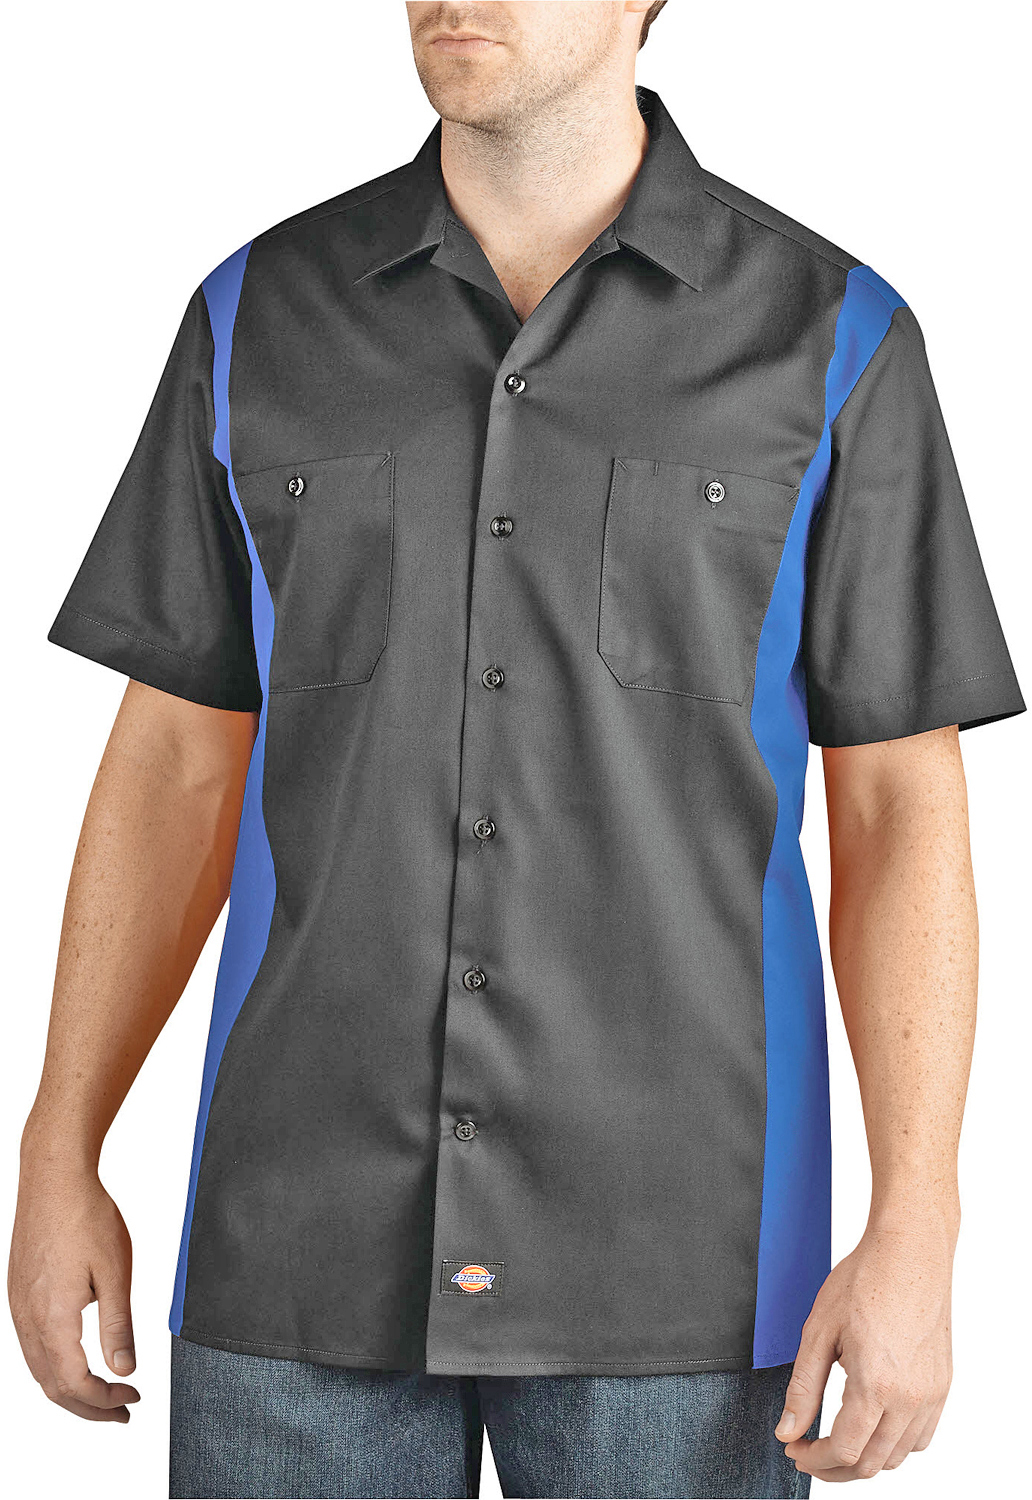 E143219 Dickies Men's Two-Tone Short-Sleeve Work Shirt